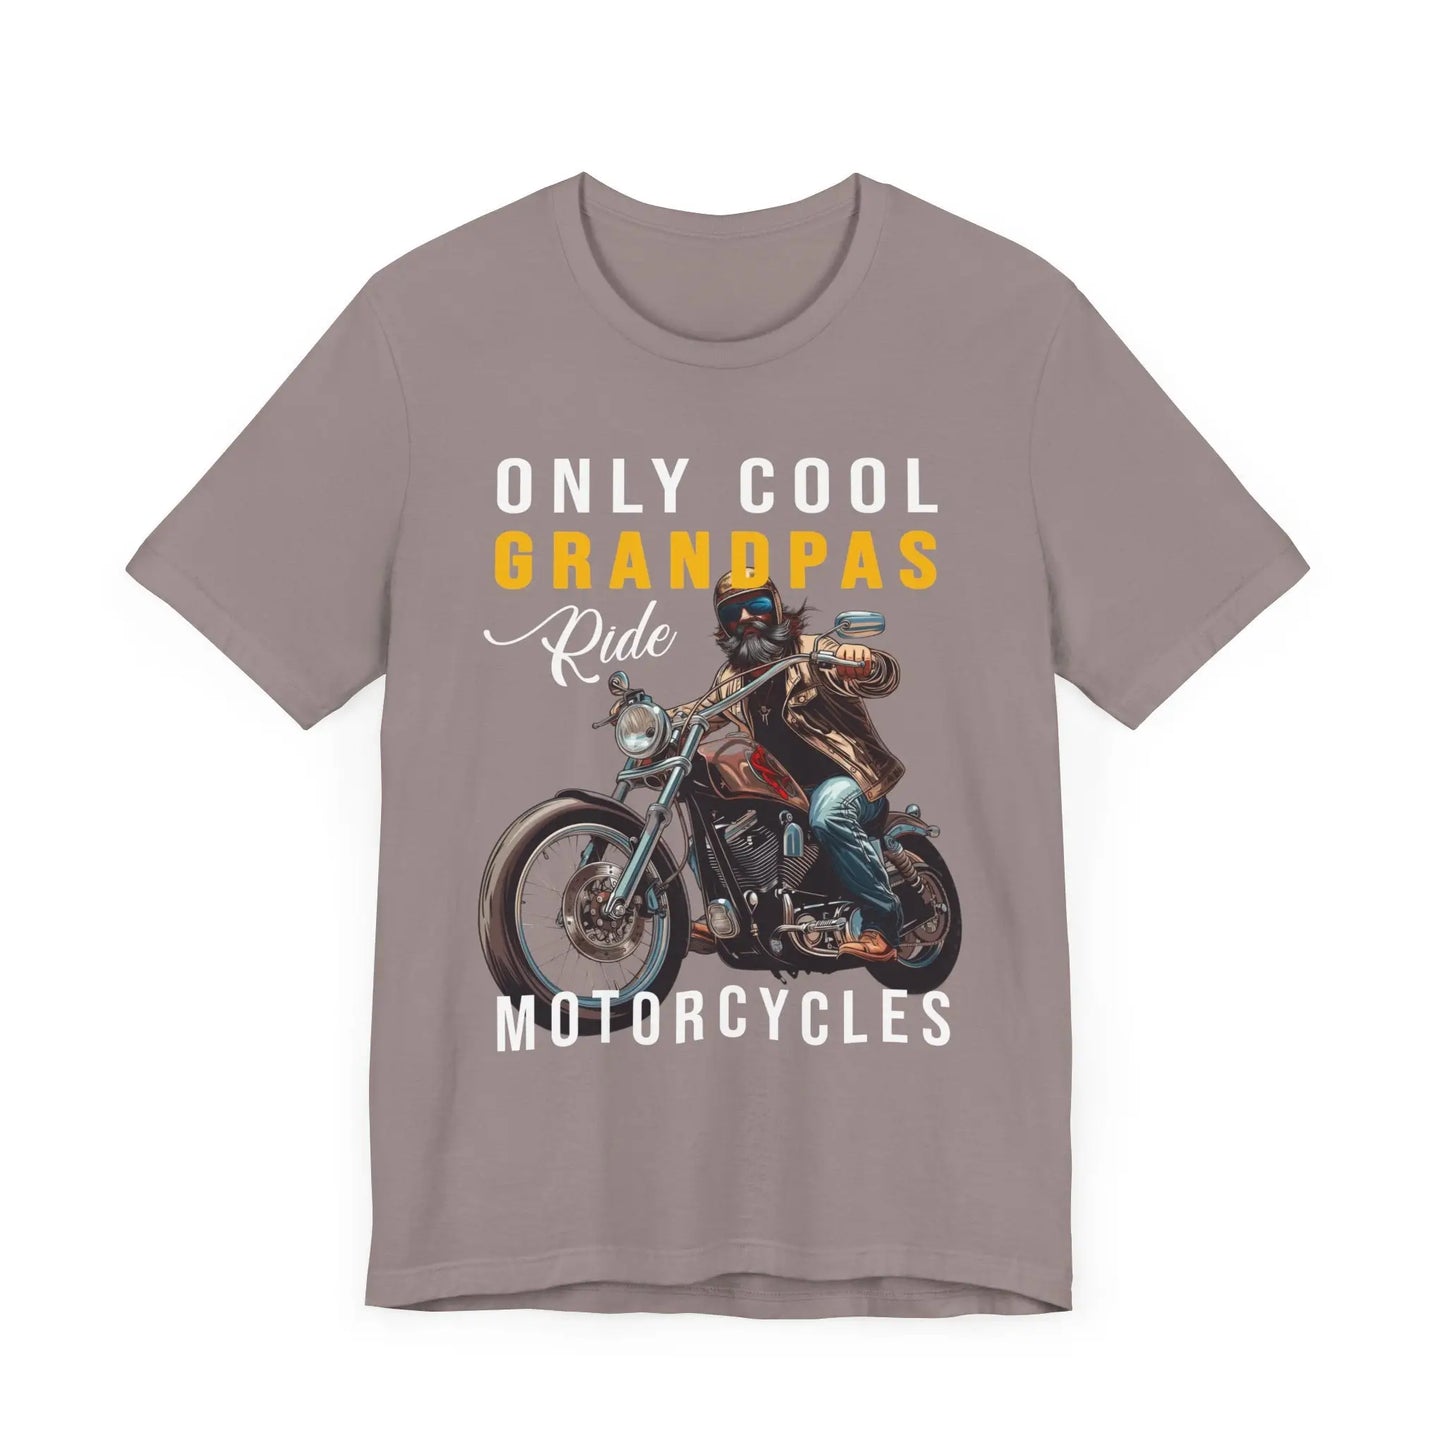 Only Cool Grandpas Ride Motorcycles Men's Tee - Wicked Tees